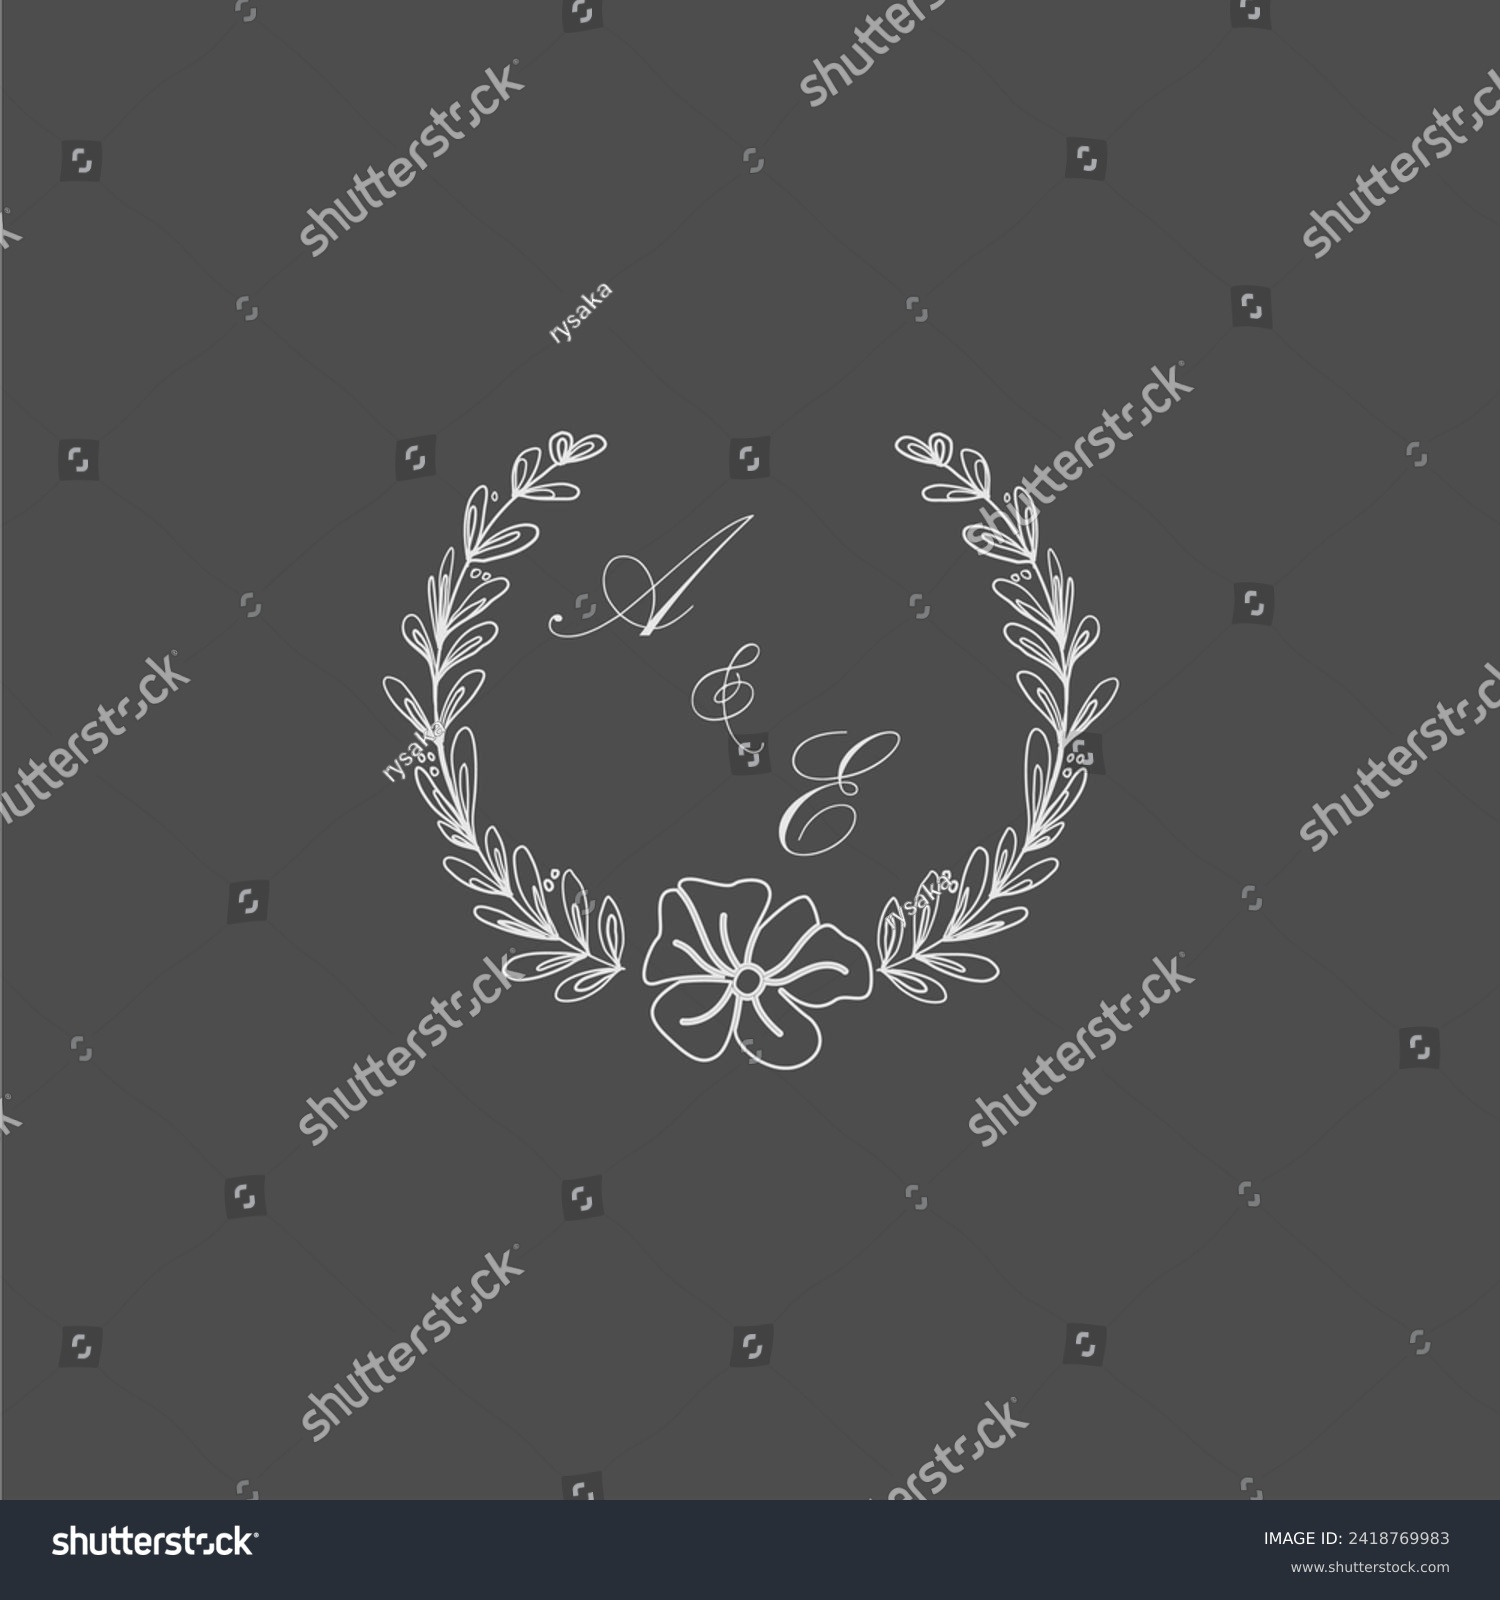 SVG of AE initial monogram wedding with creative leaf svg